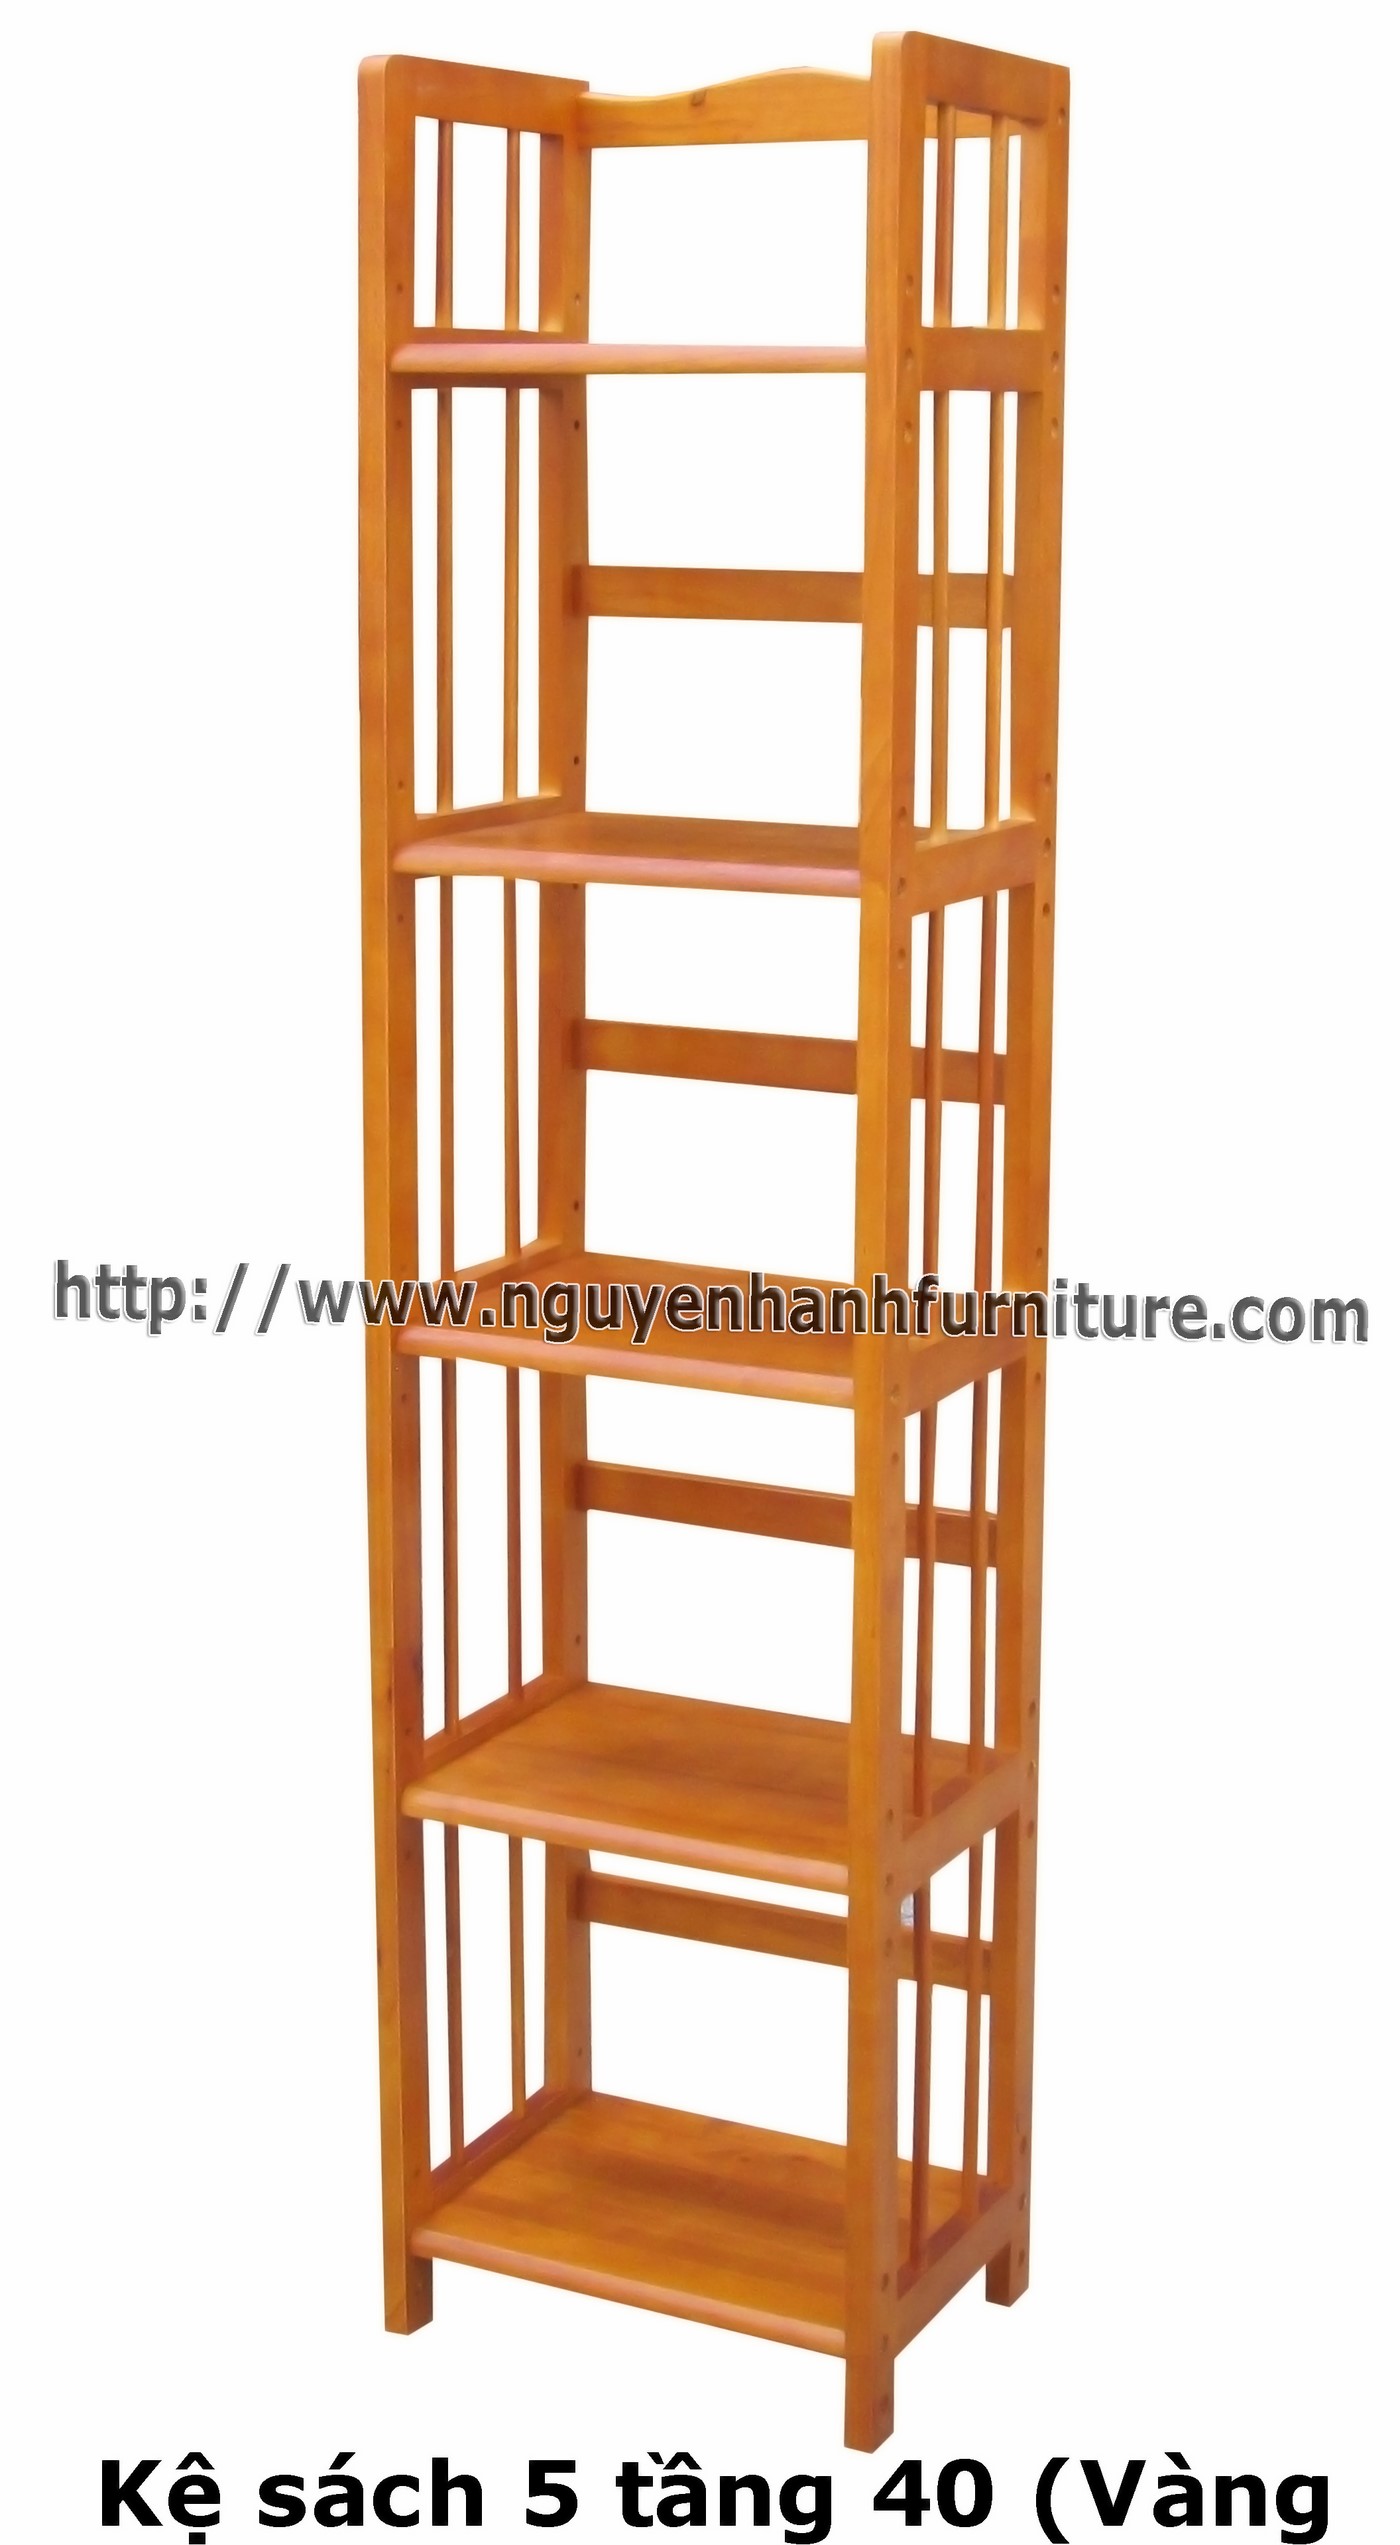 Name product: 5 storey Adjustable Bookshelf 40 (Yellow) - Dimensions: 40 x 28 x 157 (H) - Description: Wood natural rubber